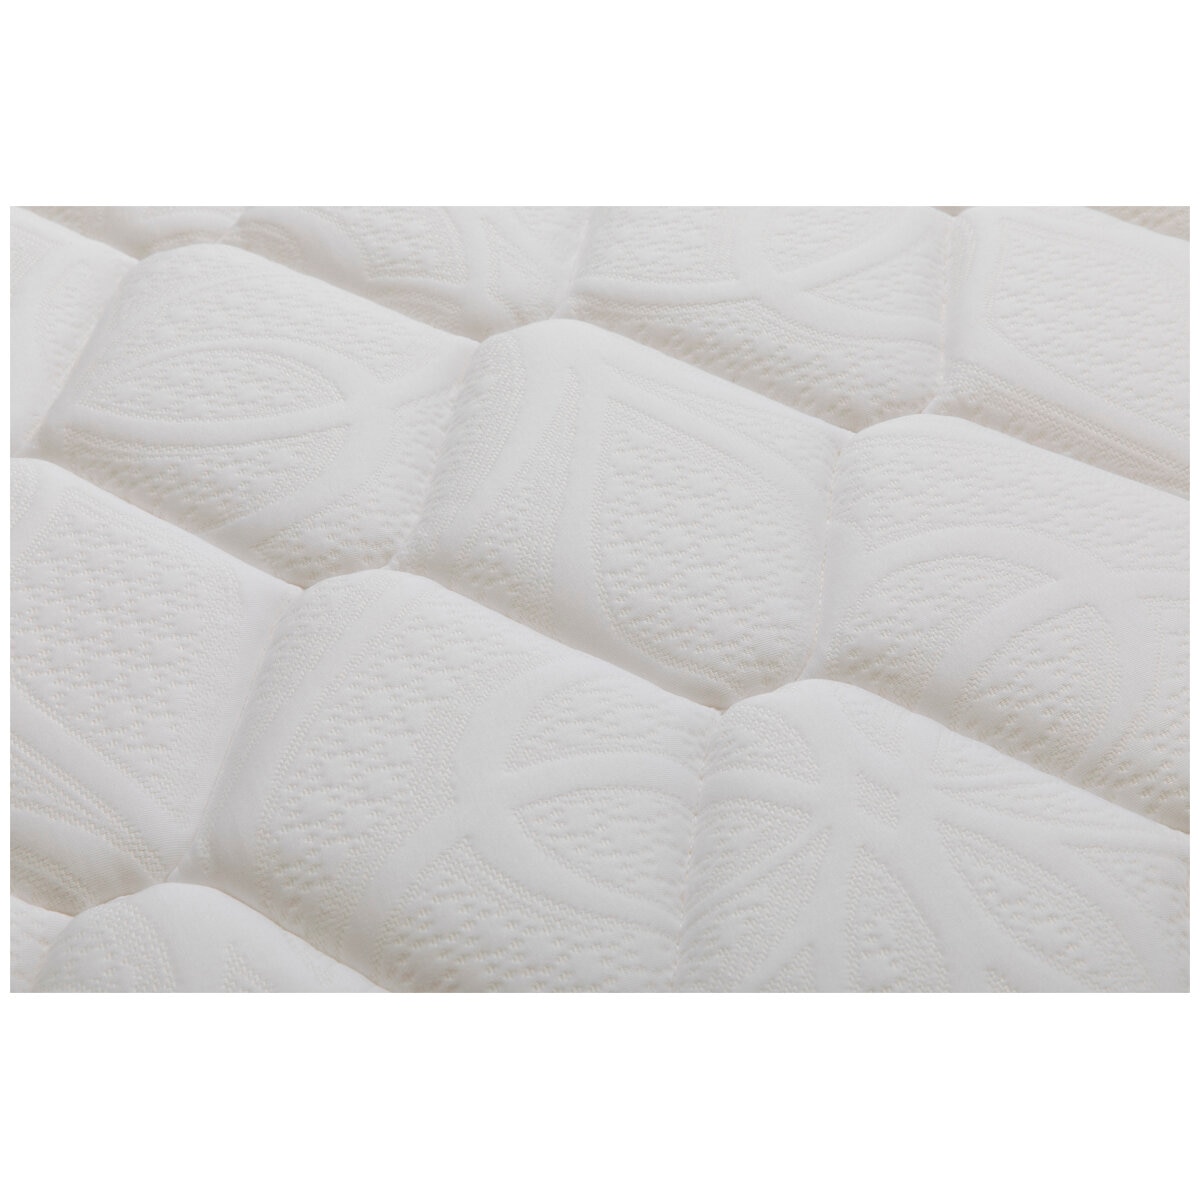 Sealy Posturepedic Elevate Ultra Cotton Charm Plush Queen Mattress